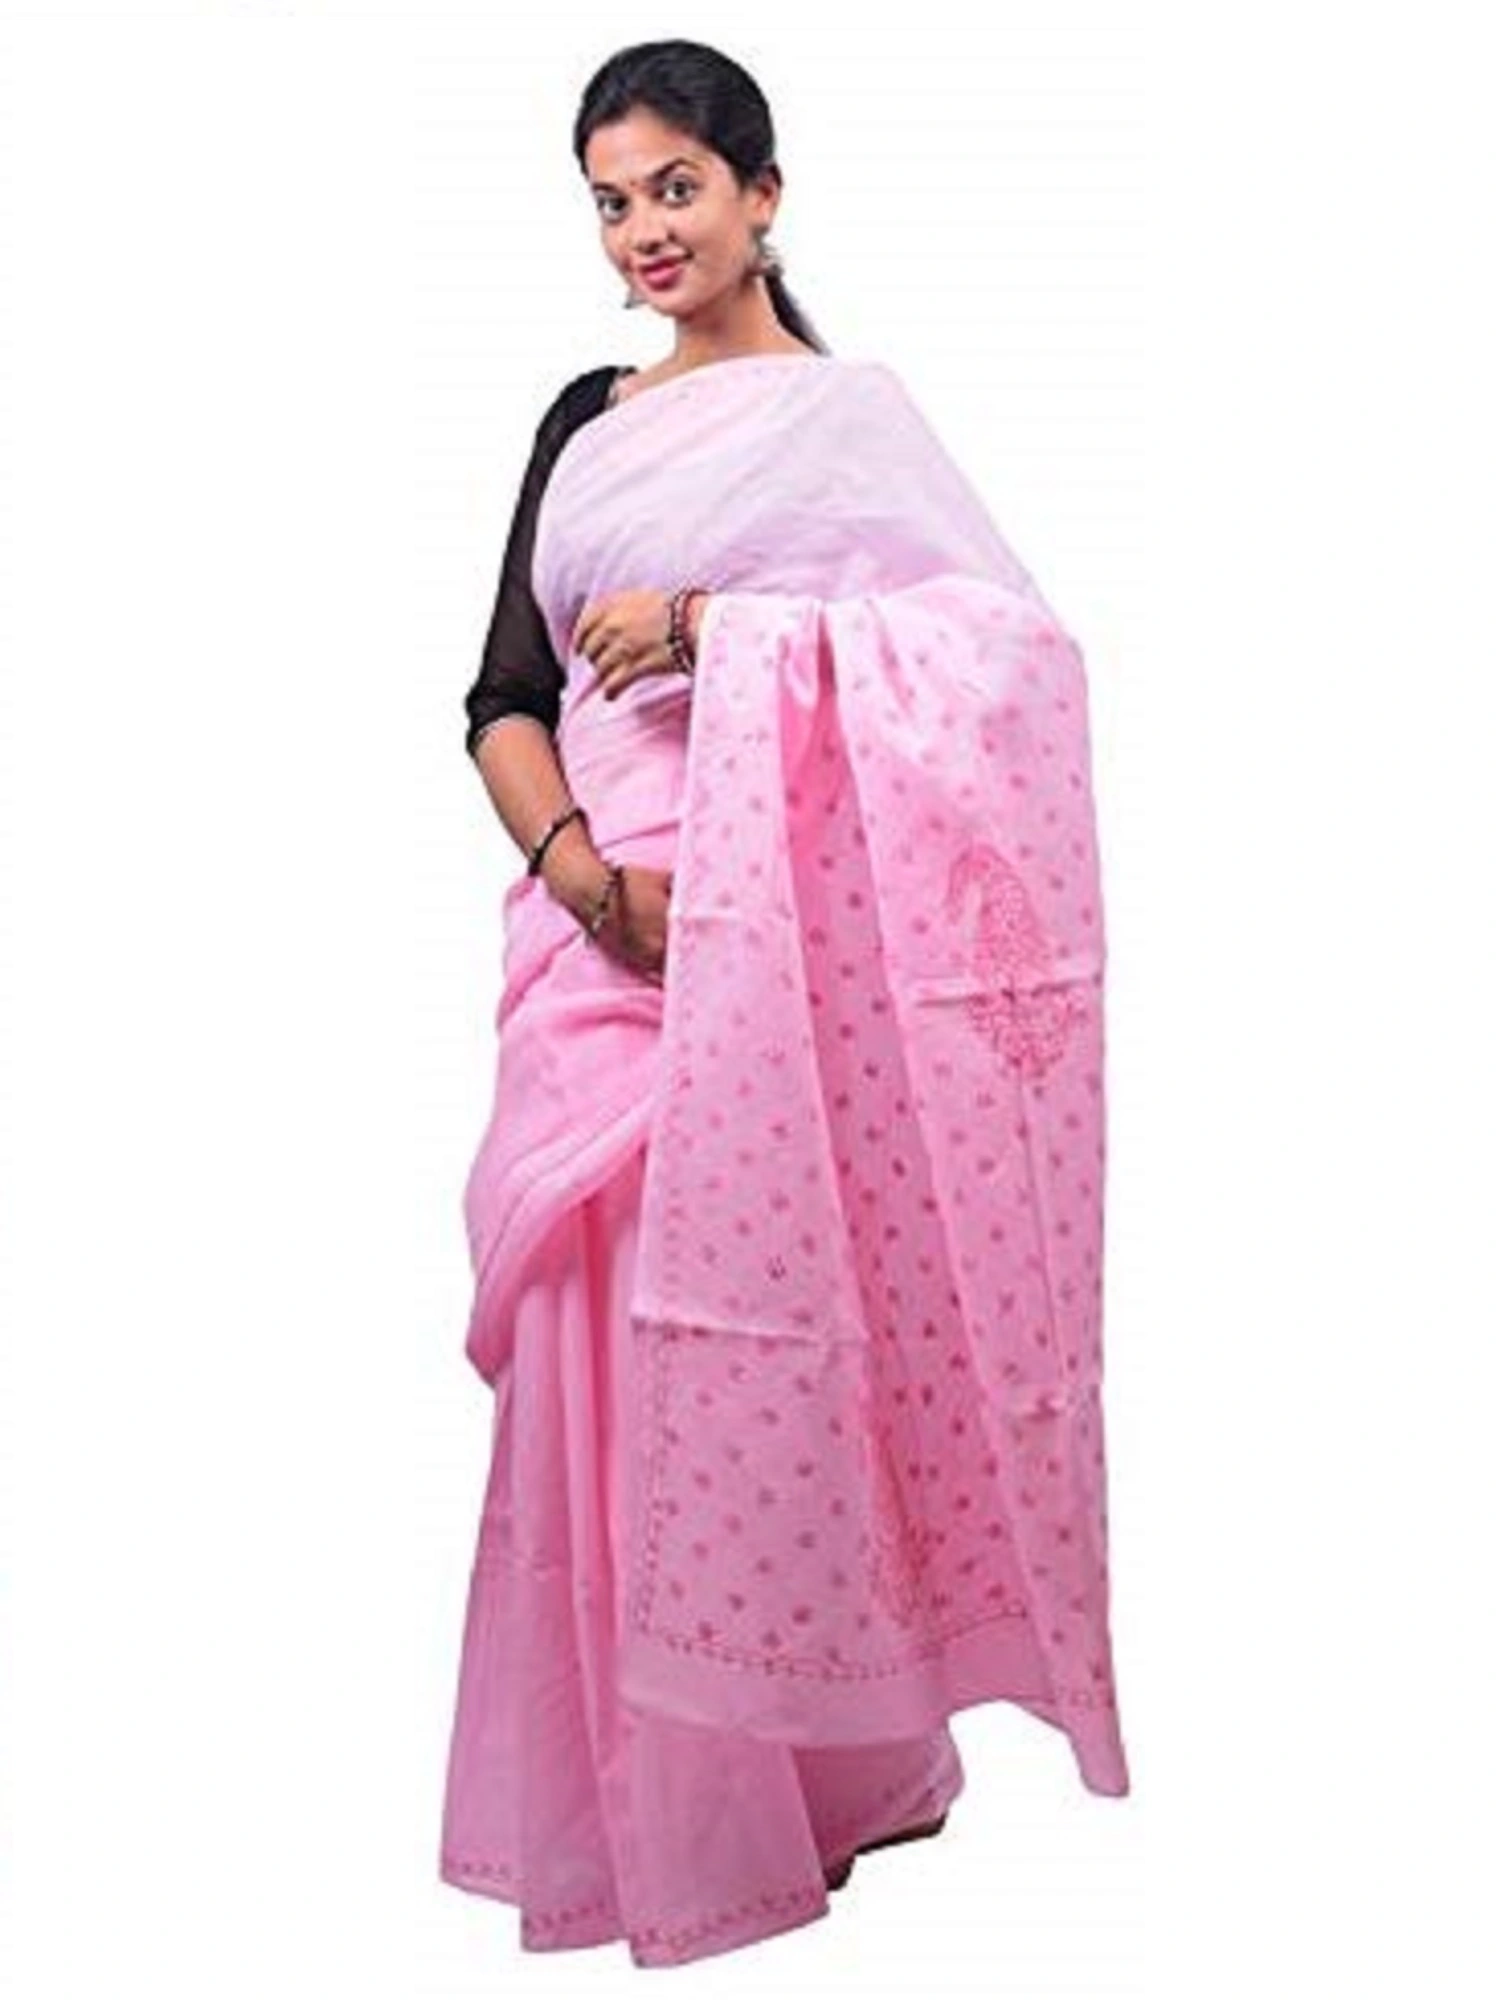 Lavangi Lucknow Chikankari Baby Pink Keel Palla Saree with Pink Threads